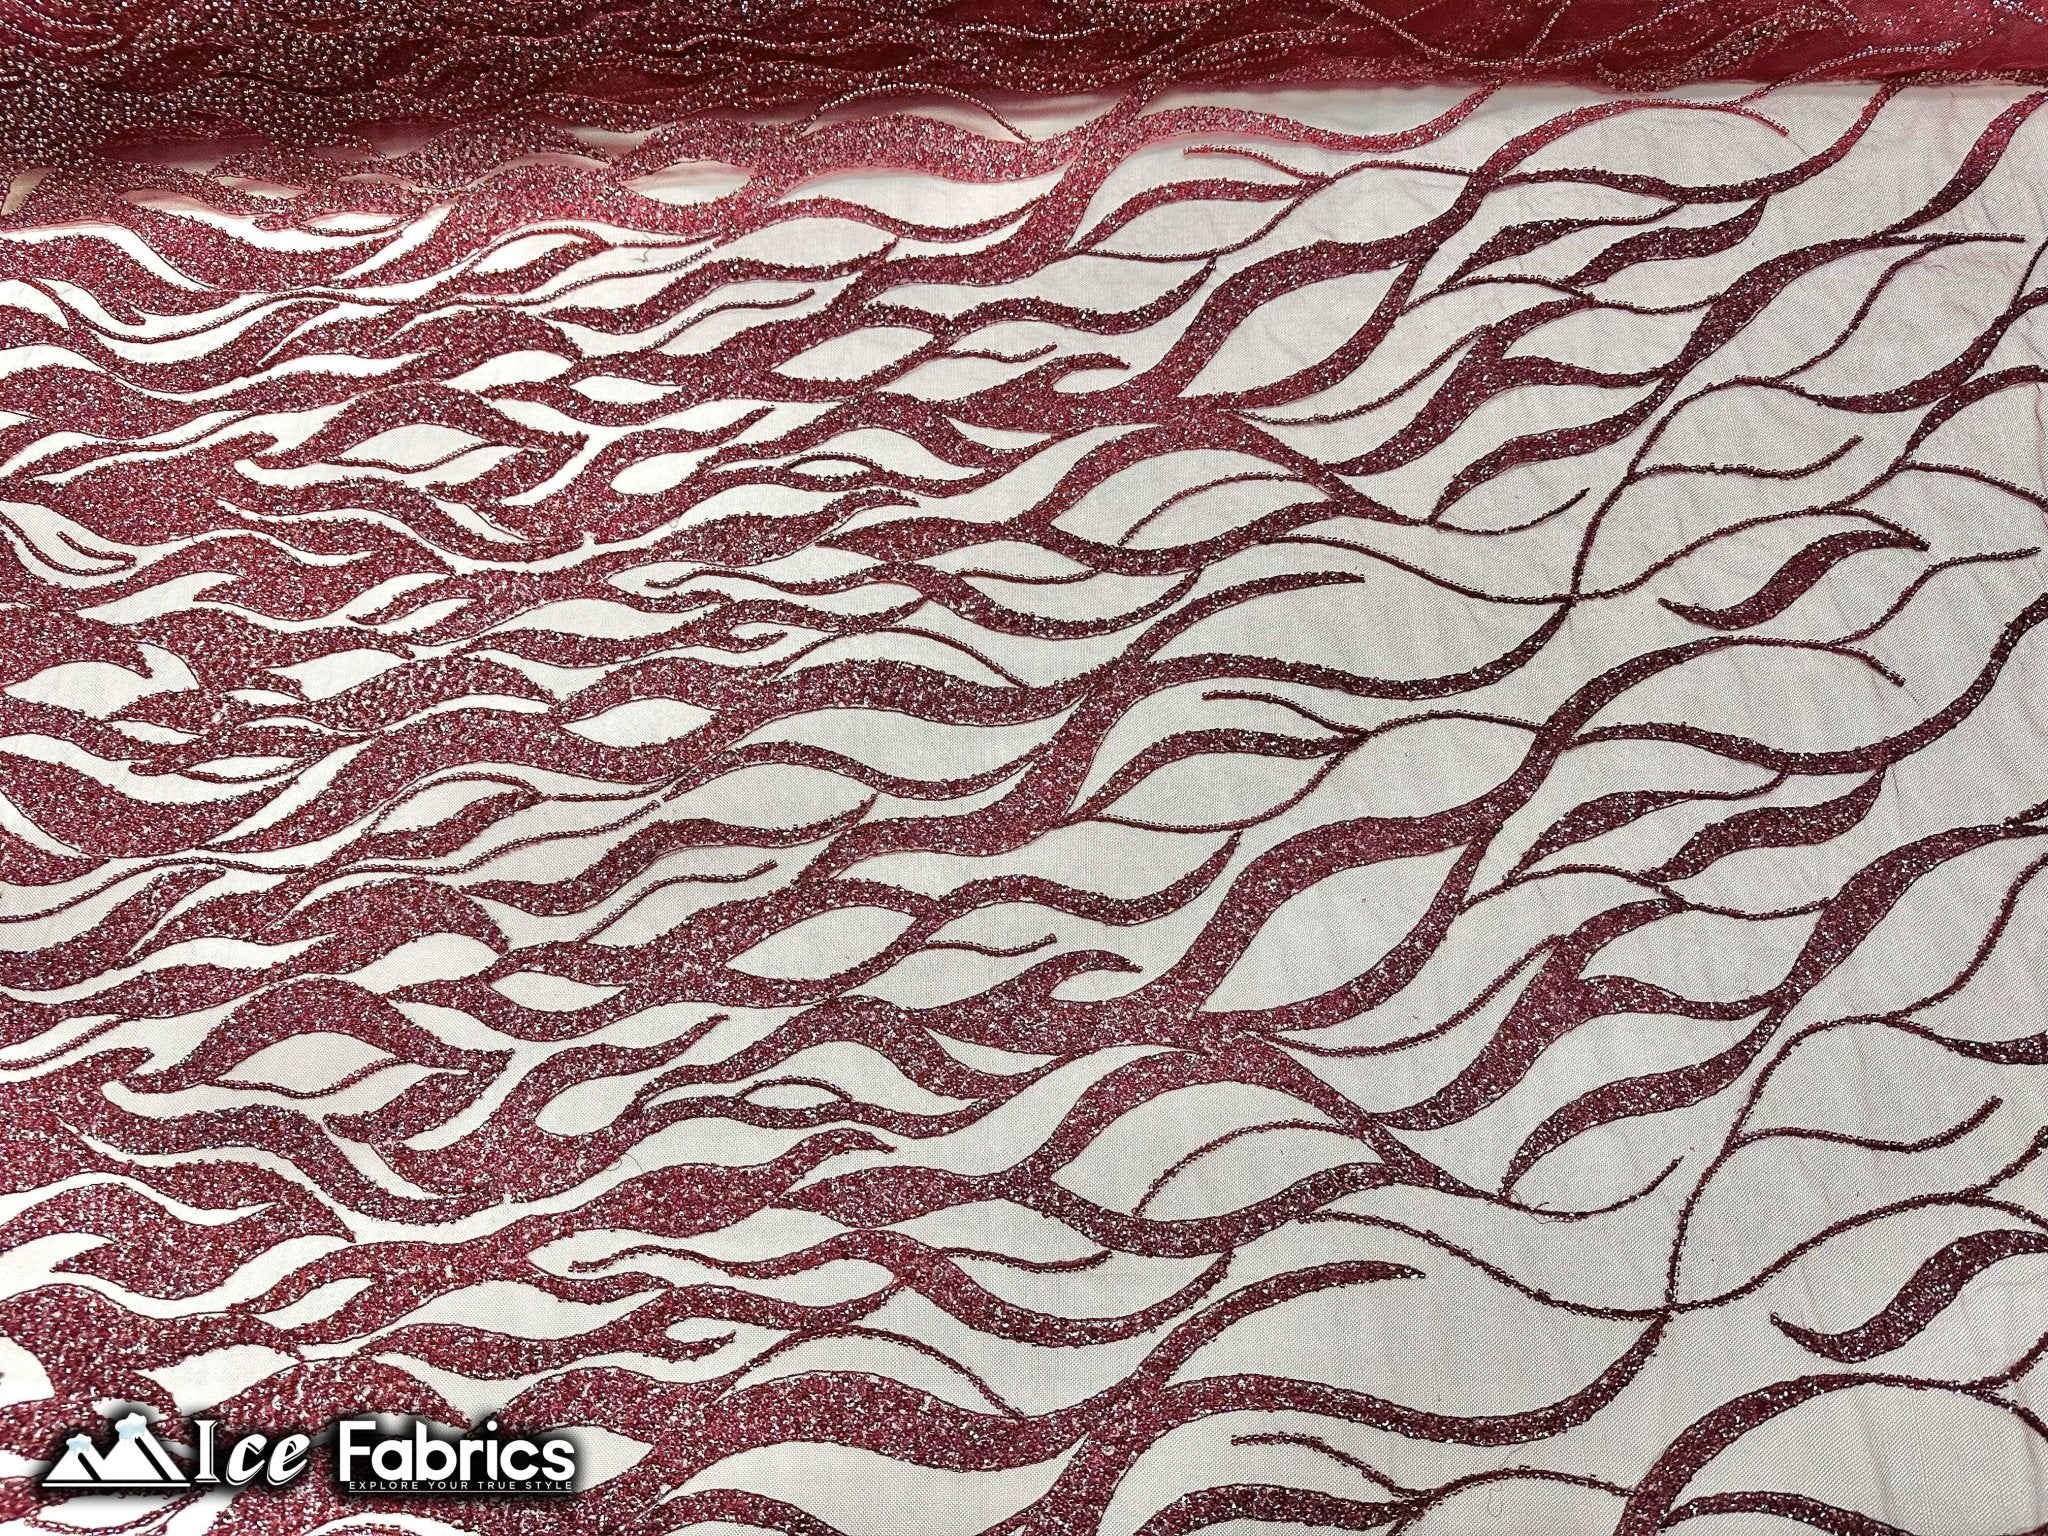 Elegant Heavy Beaded Fabric Lace Fabric with SequinICE FABRICSICE FABRICSBurgundyBy The Yard (54" Wide)Elegant Heavy Beaded Fabric Lace Fabric with Sequin ICE FABRICS Burgundy